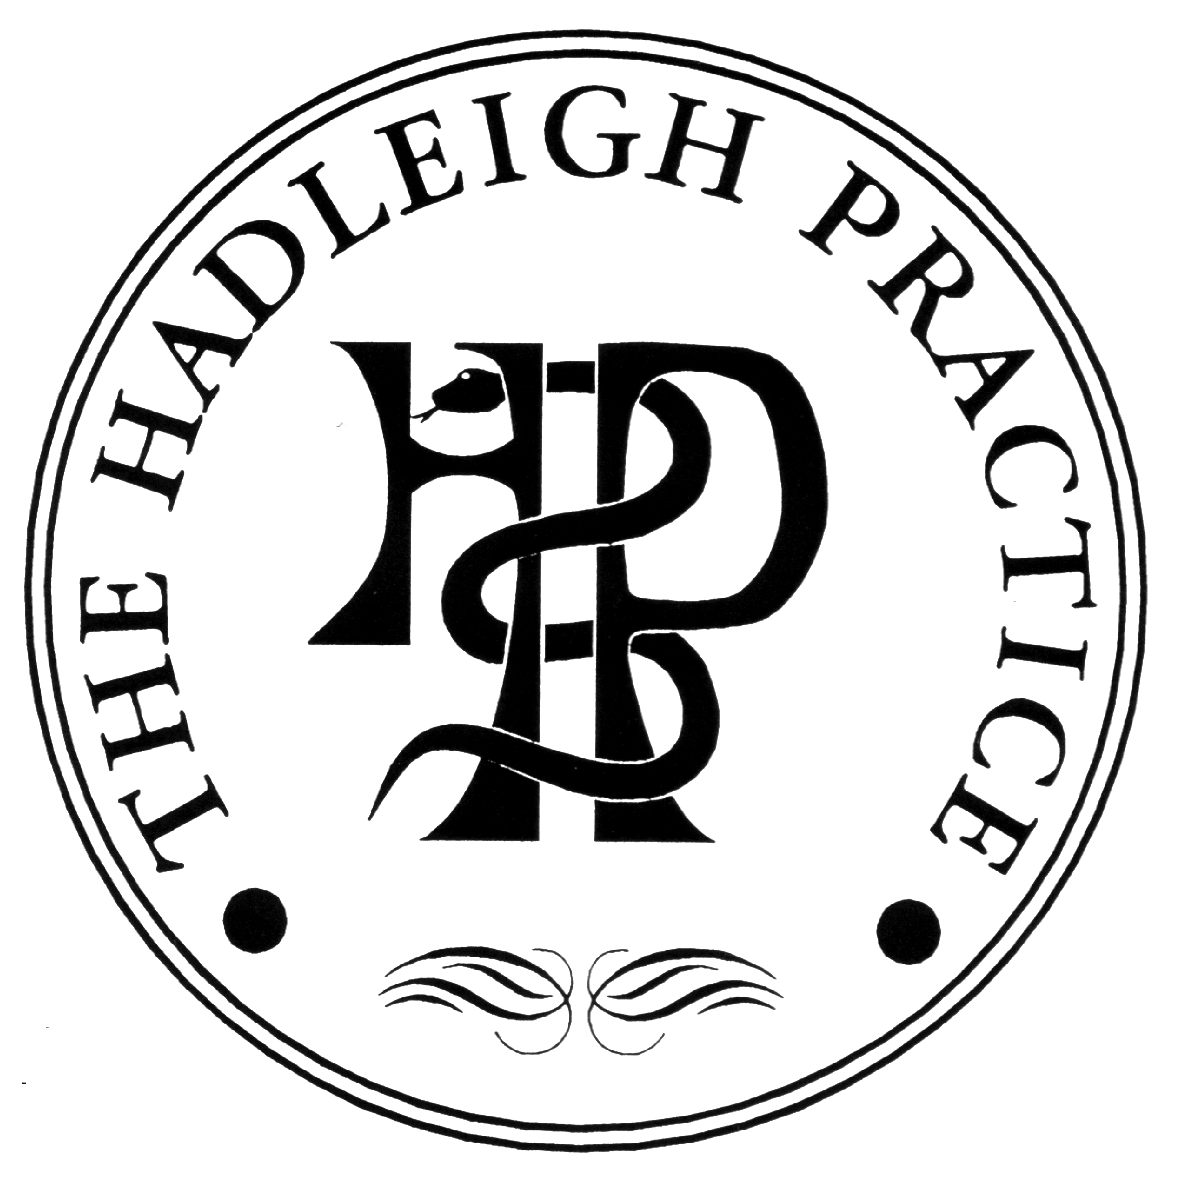 The Hadleigh Practice logo